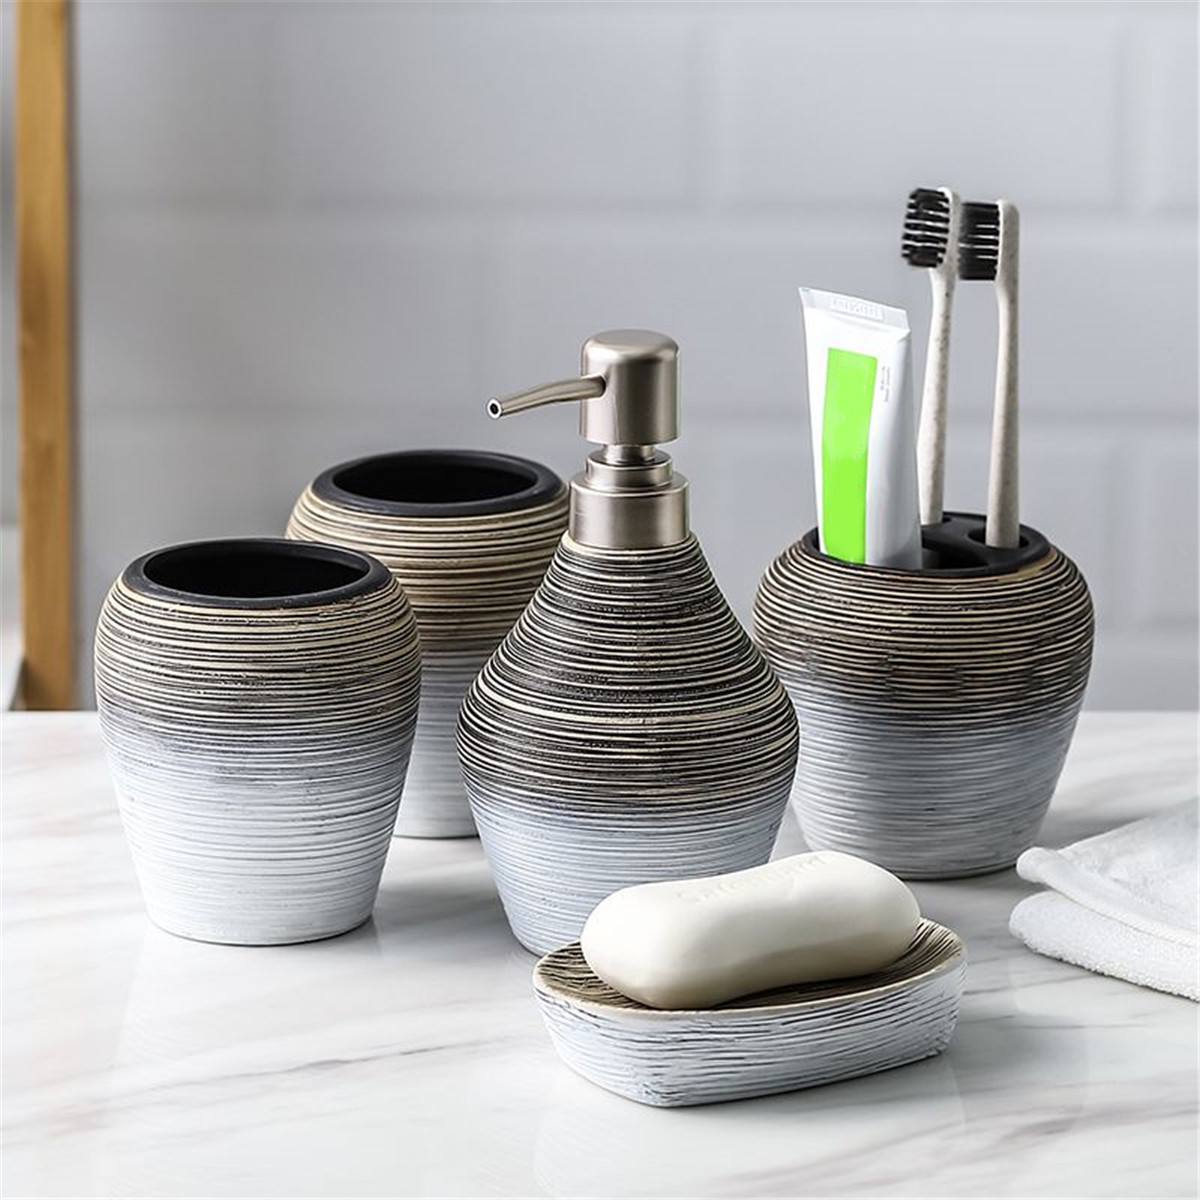 5PCS Ceramic Bathroom Accessories Set Tray Lotion Dispenser Soap Dish Toothbrush Holder Gargle Cup Set Shampoo Pump Bottle